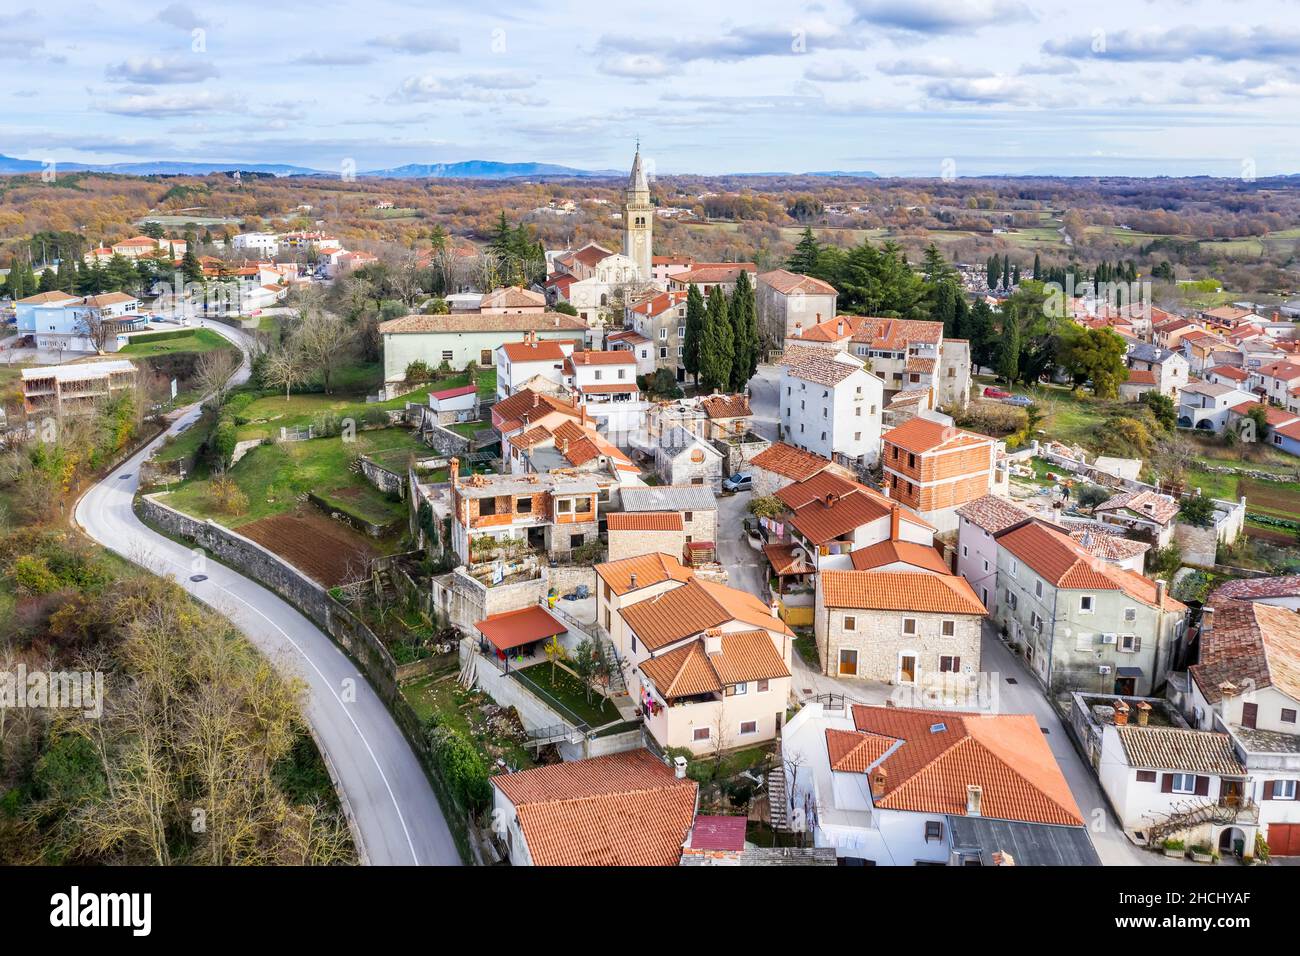 An aerial view of Zminj, parish church of St. Mihovil located on the hill, Istria, Croatia Stock Photo